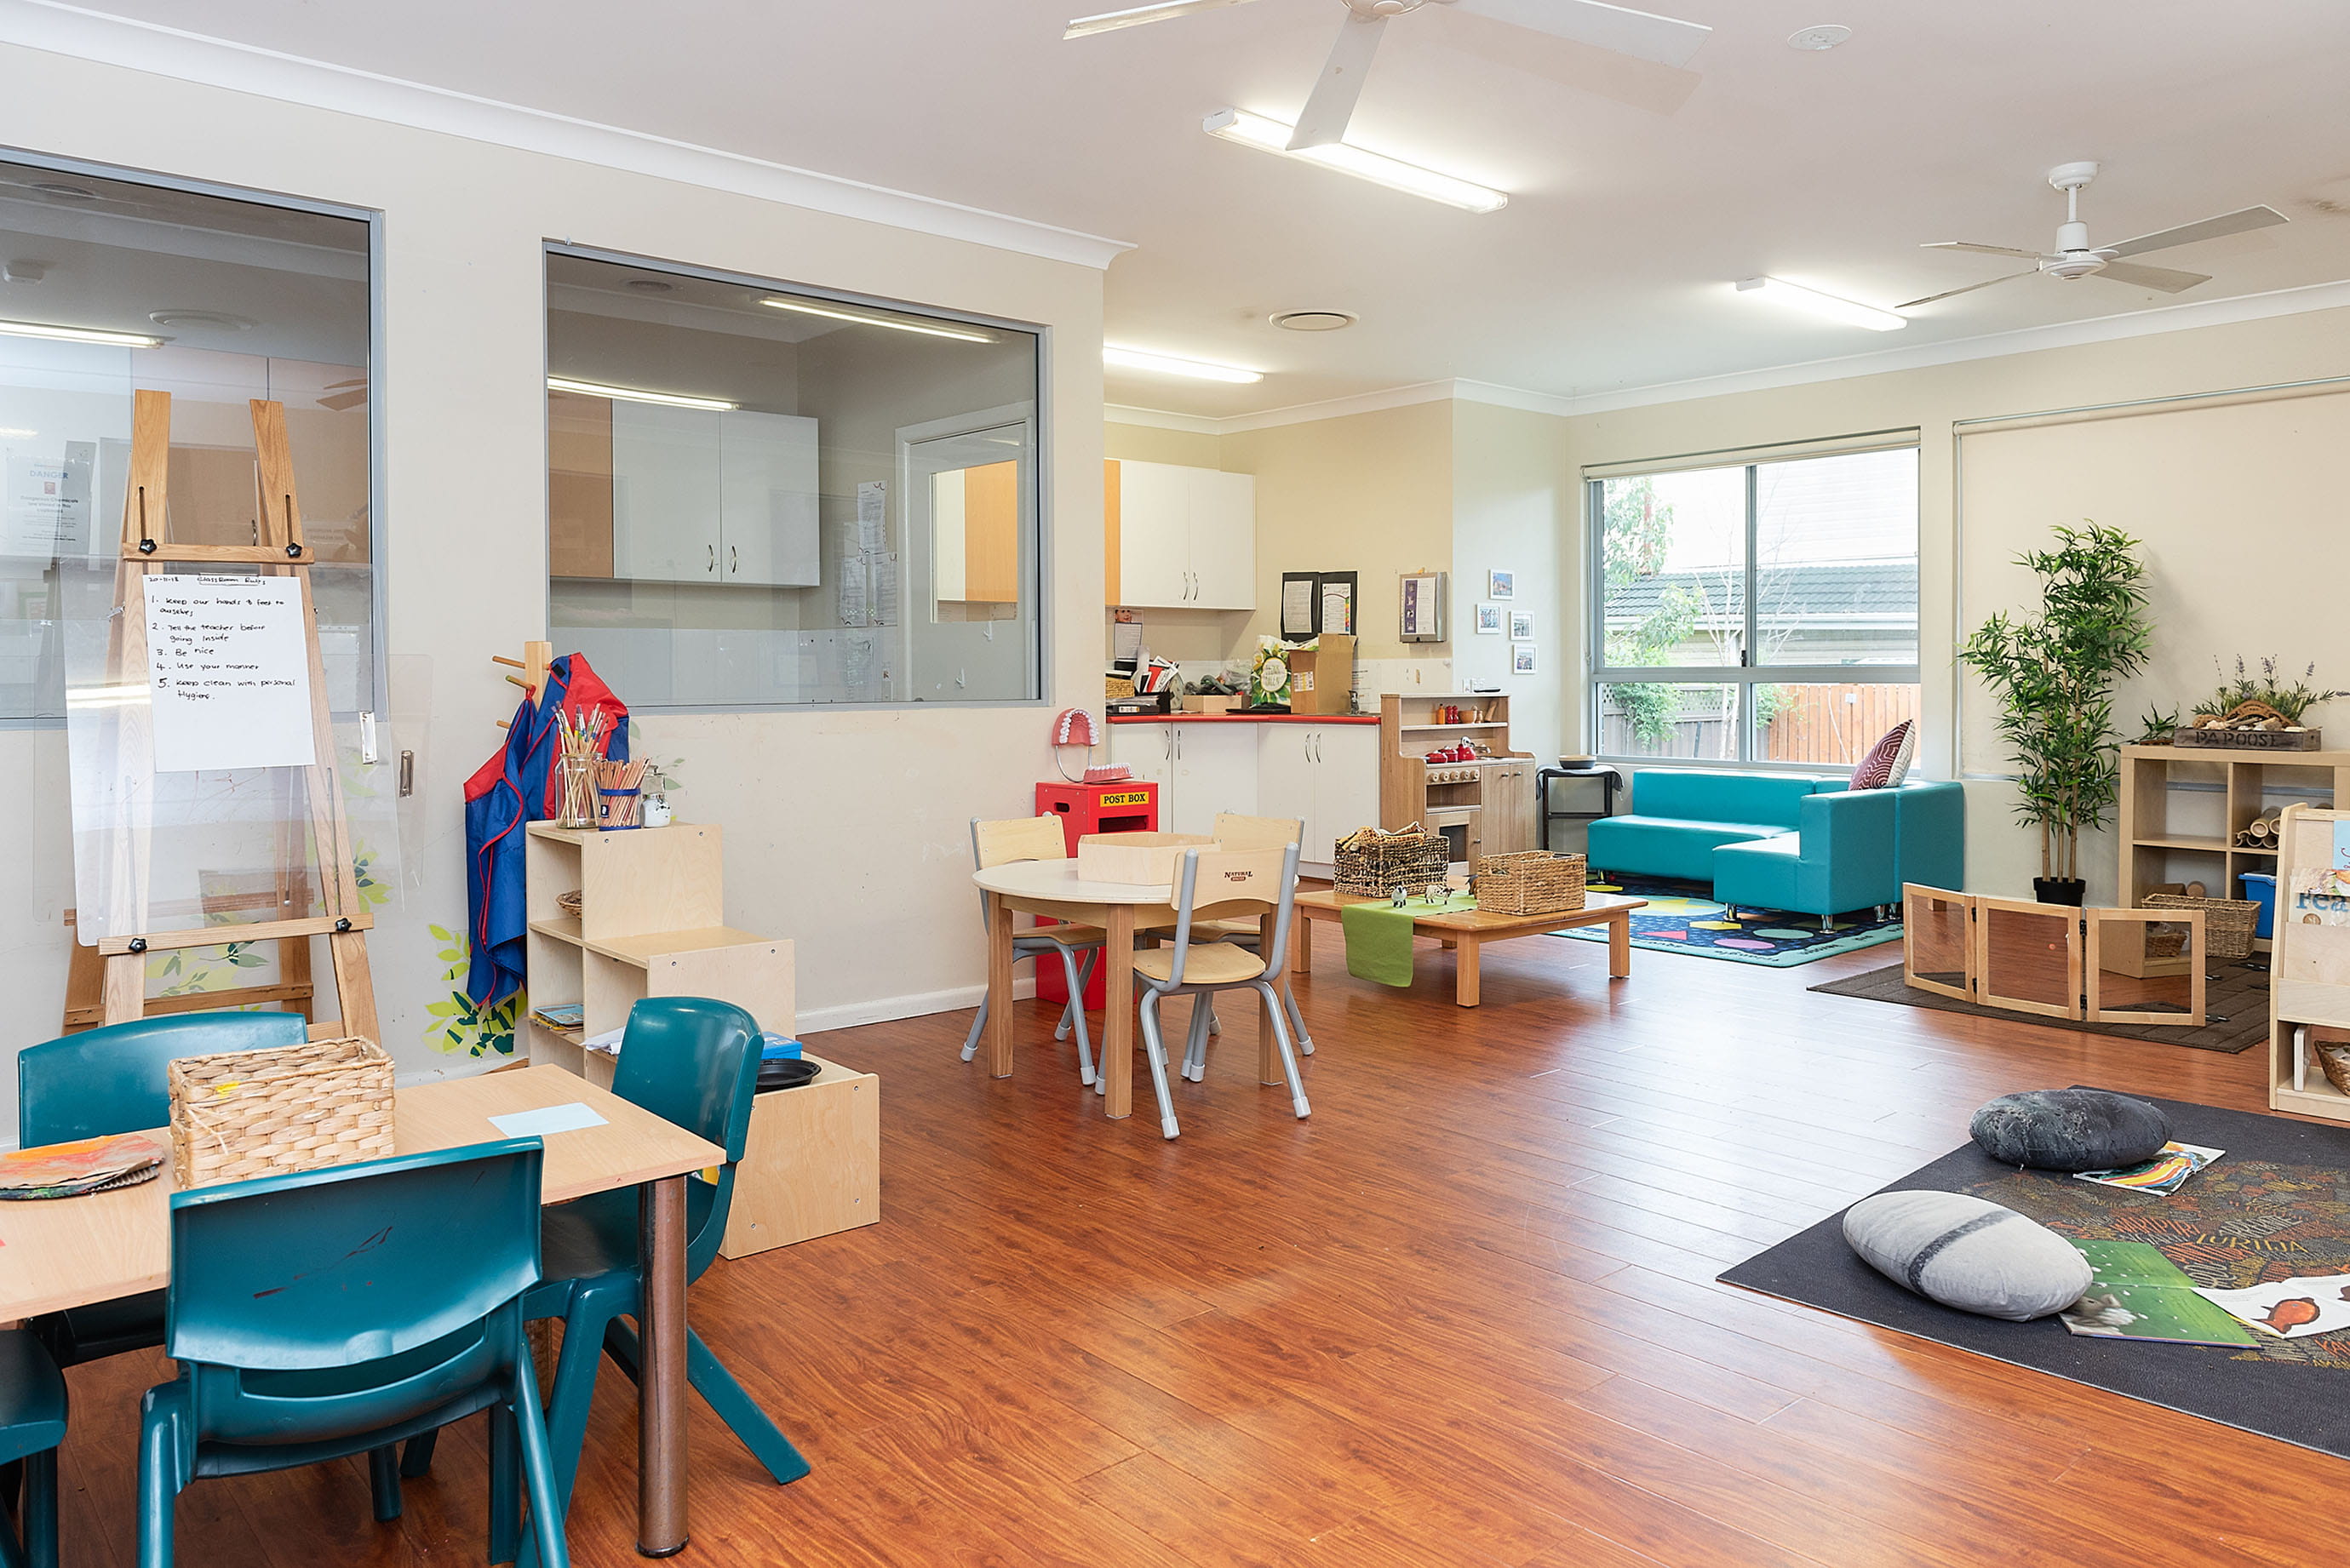 Indoor play area at Merrylands First Grammar daycare